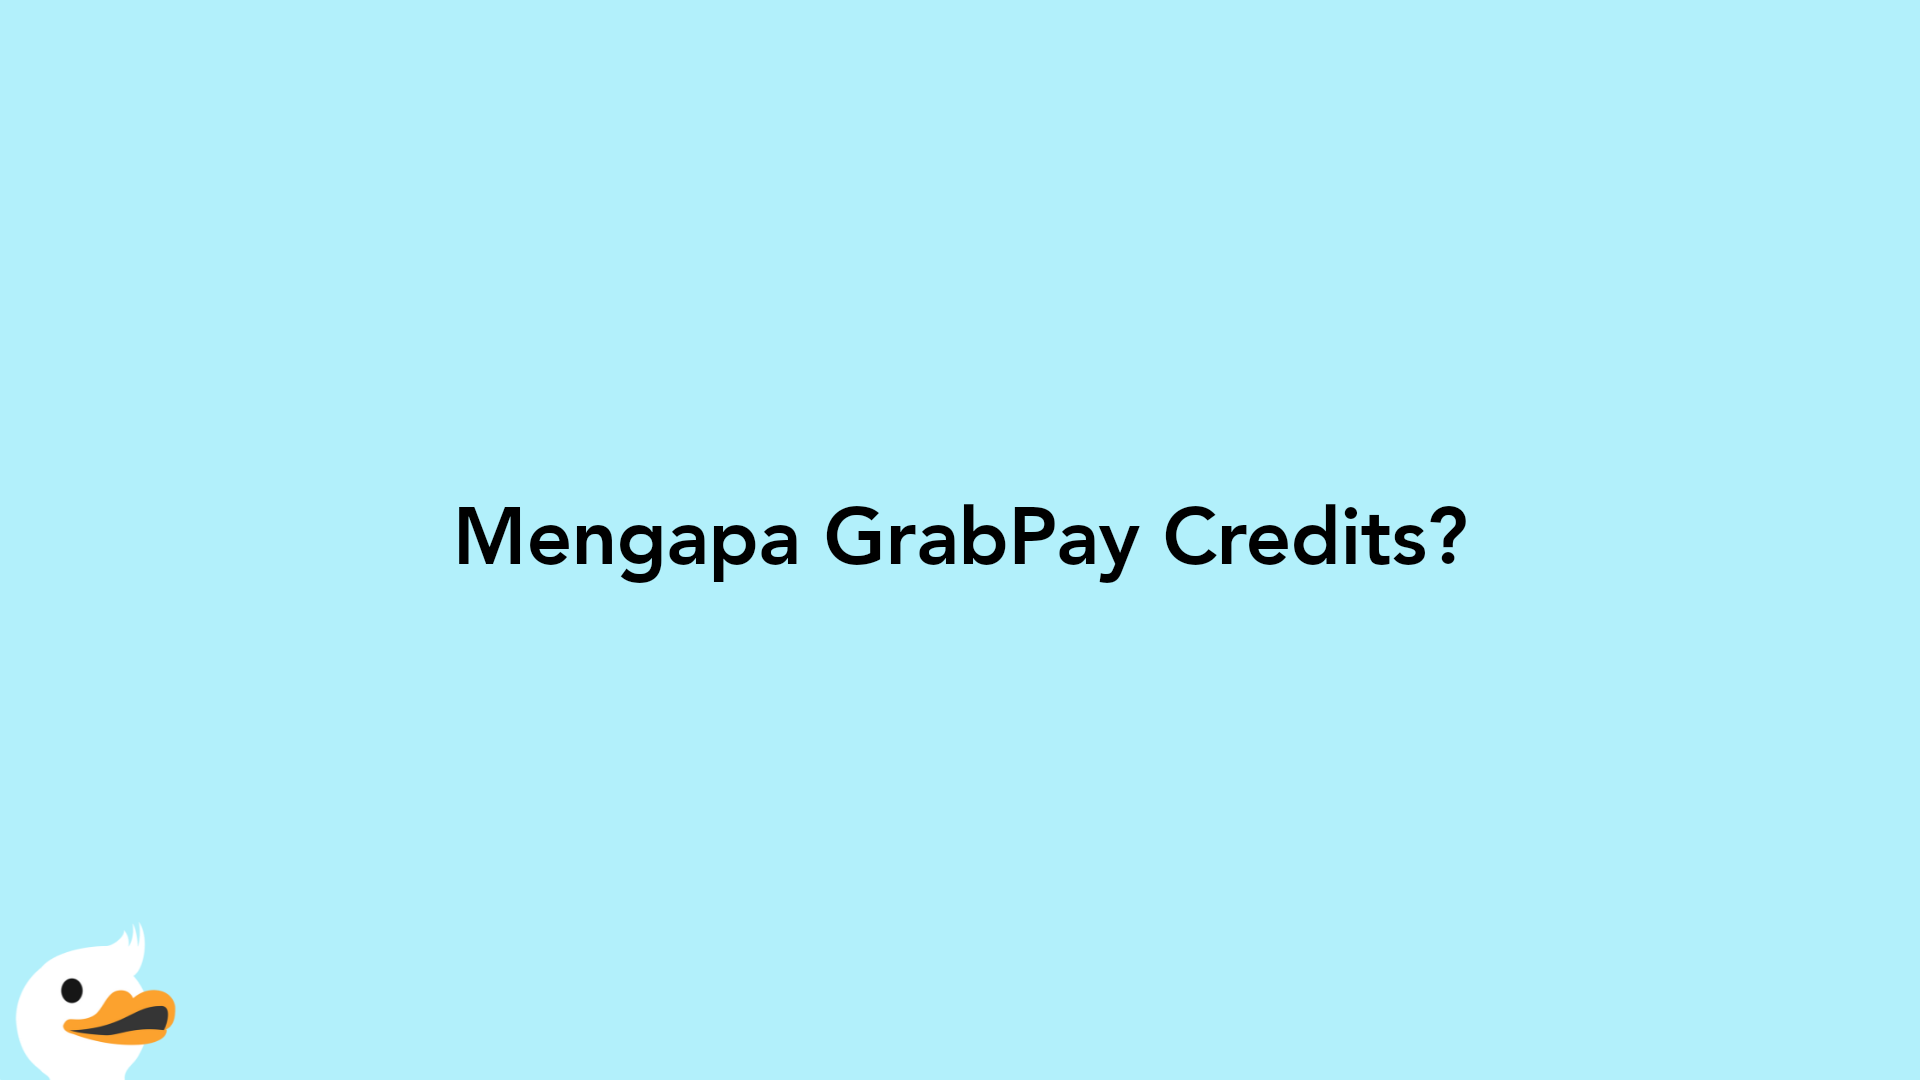 Mengapa GrabPay Credits?